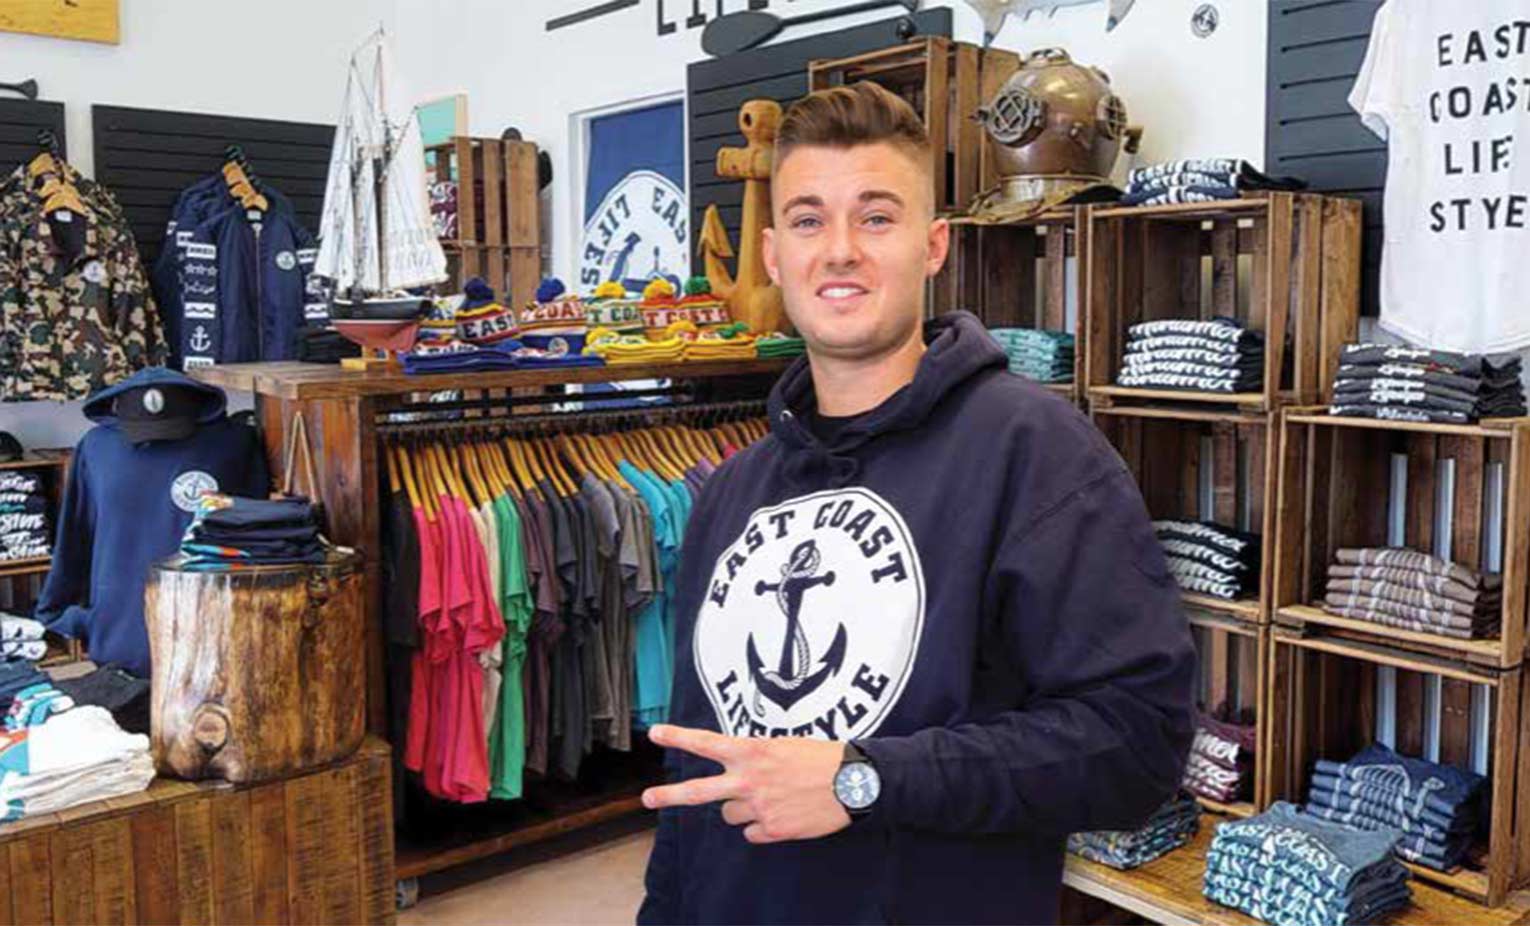 Alex MacLean, founder of East Coast Lifestyle, wearing an East Coast Lifestyle hoodie.